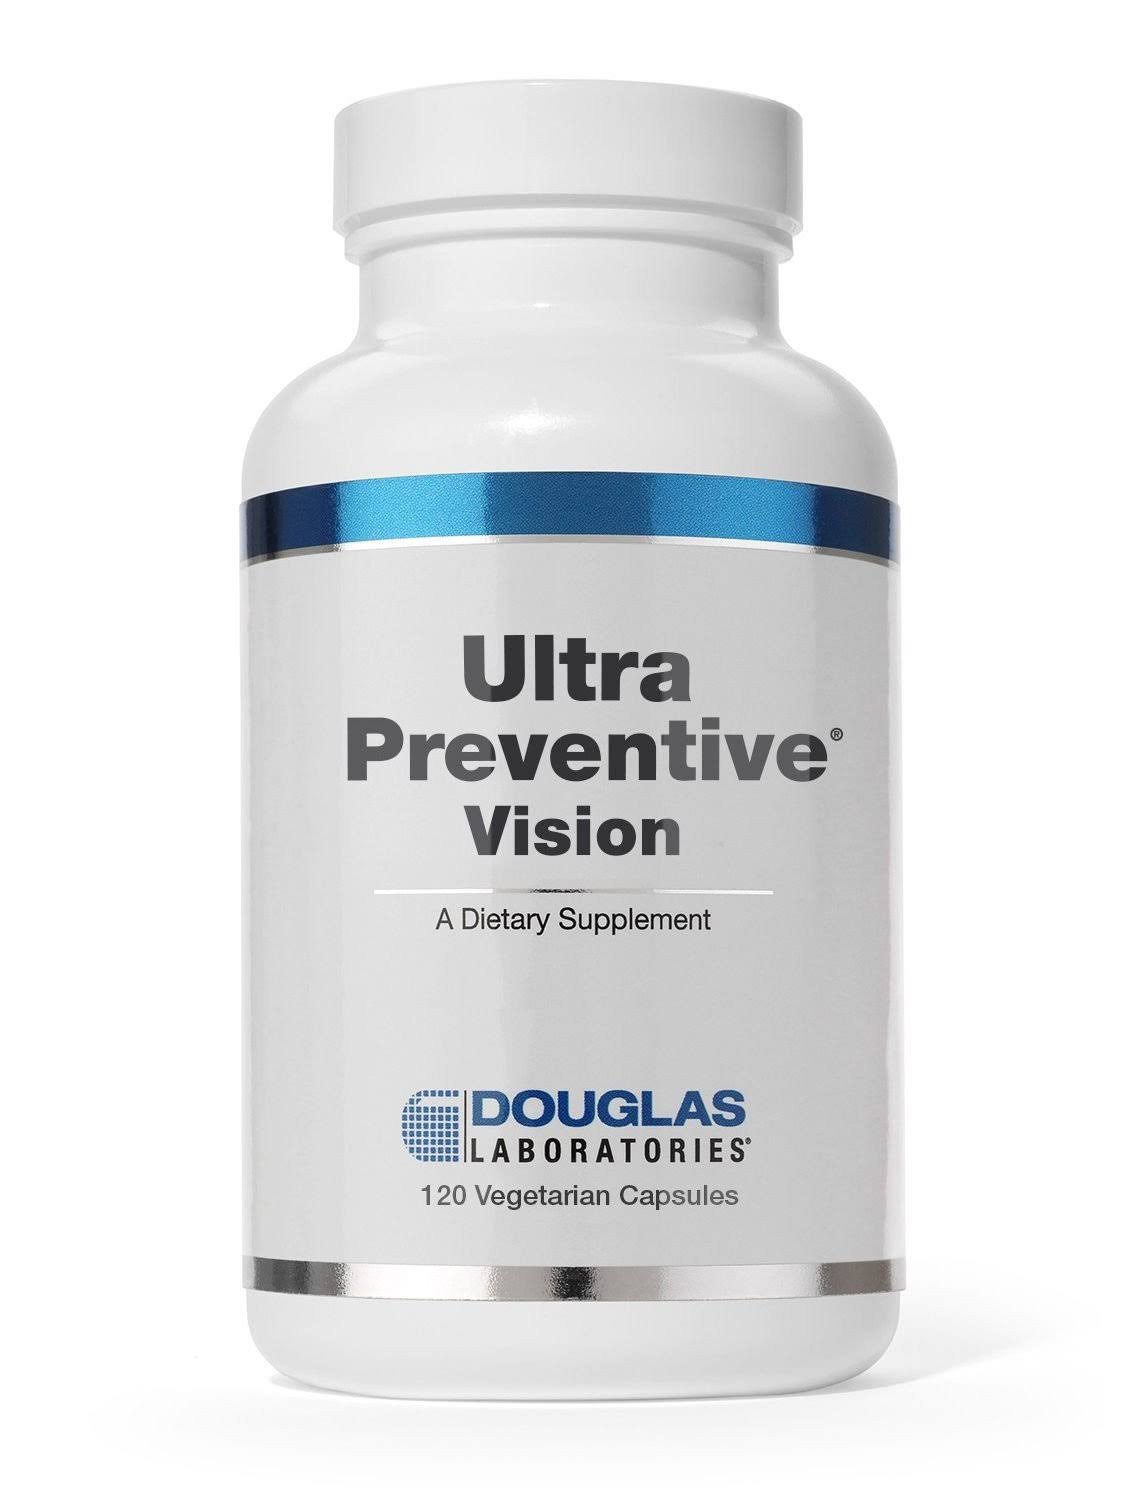 Douglas Laboratories Ultra Preventive Vision Supplement - 120ct